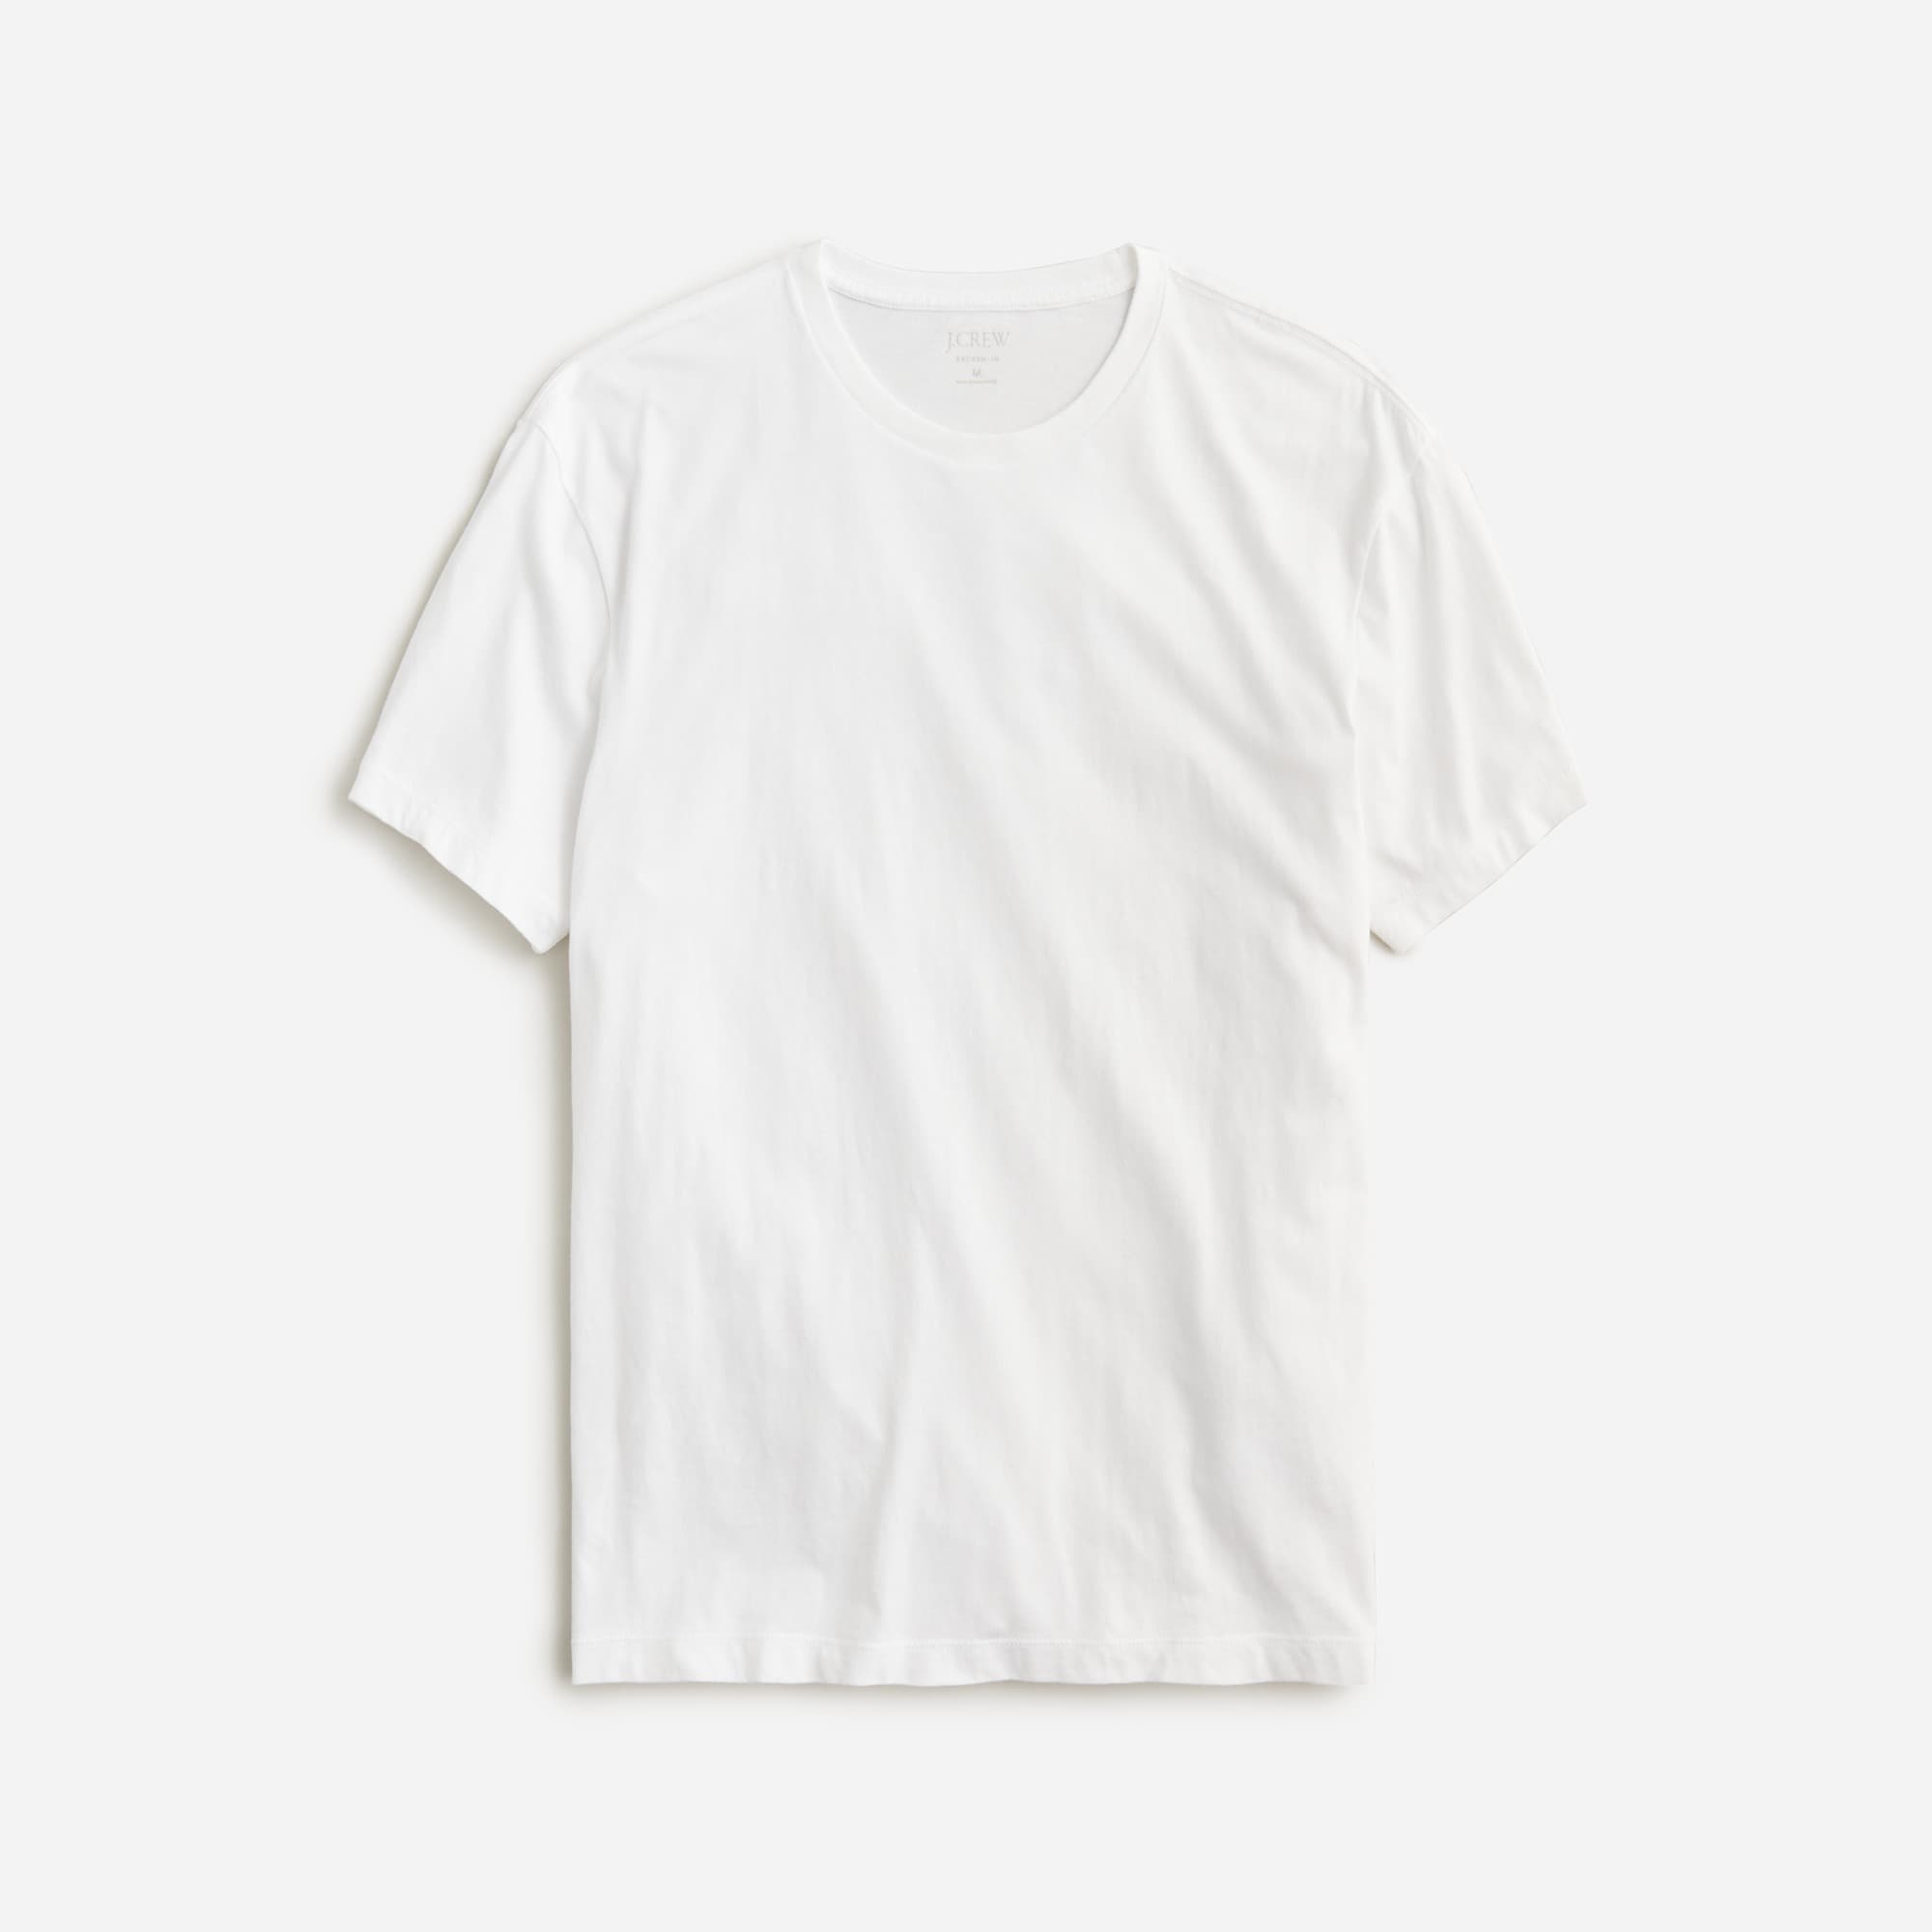 J.Crew Men's Tall Broken-In Short-Sleeve T-Shirt (Size Large)